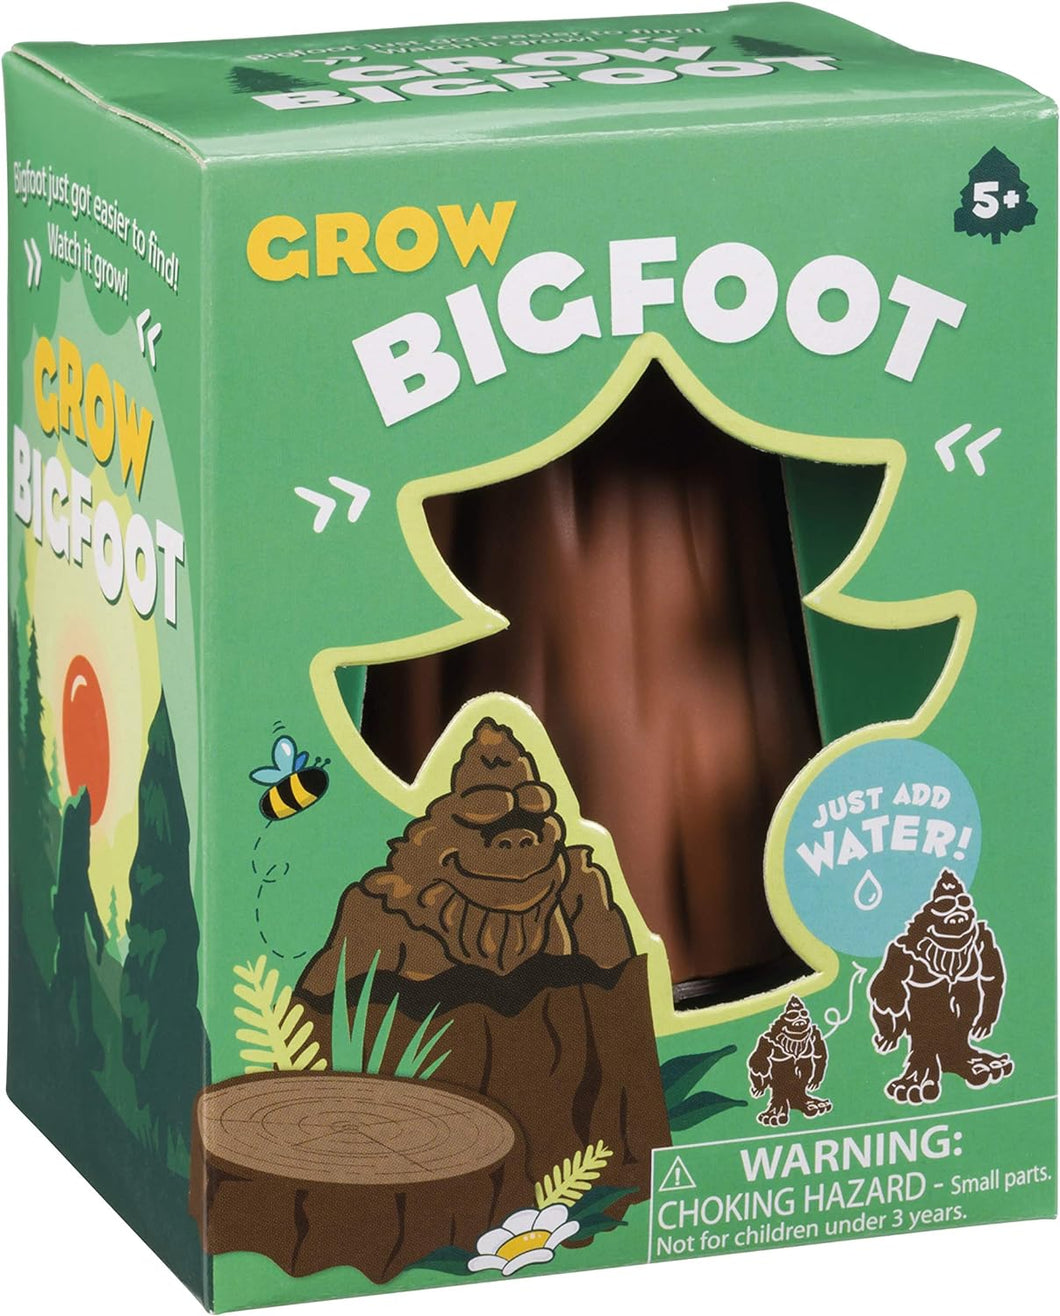 Hatchin' Grow Bigfoot - Just Add Water and Watch Them Grow! - Fun DIY Kit